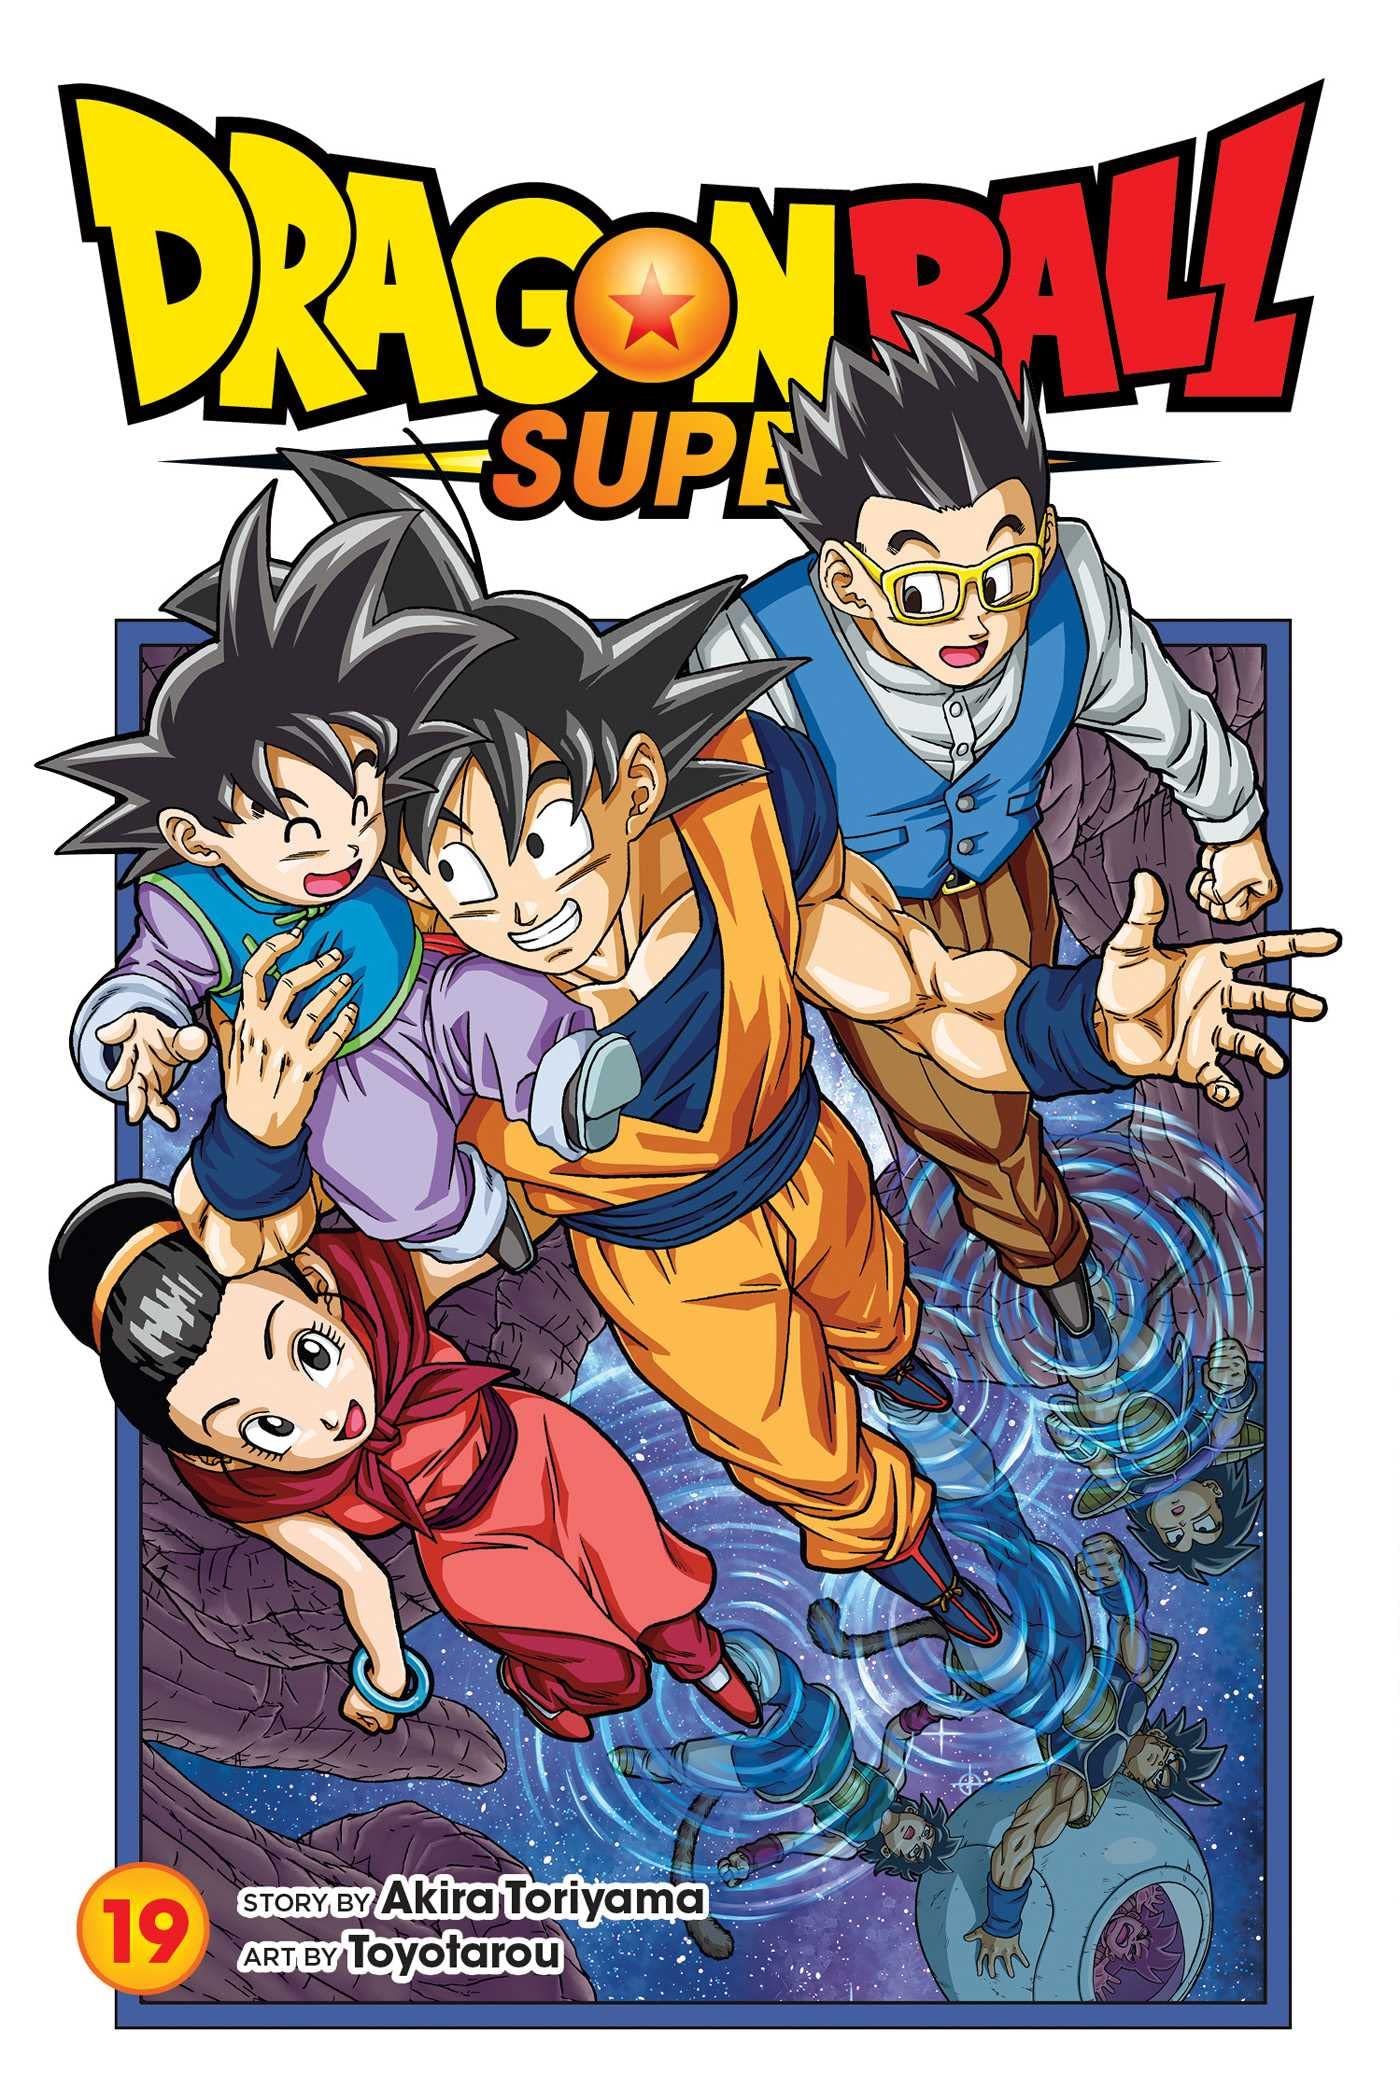 Dragon Ball Super Manga 81